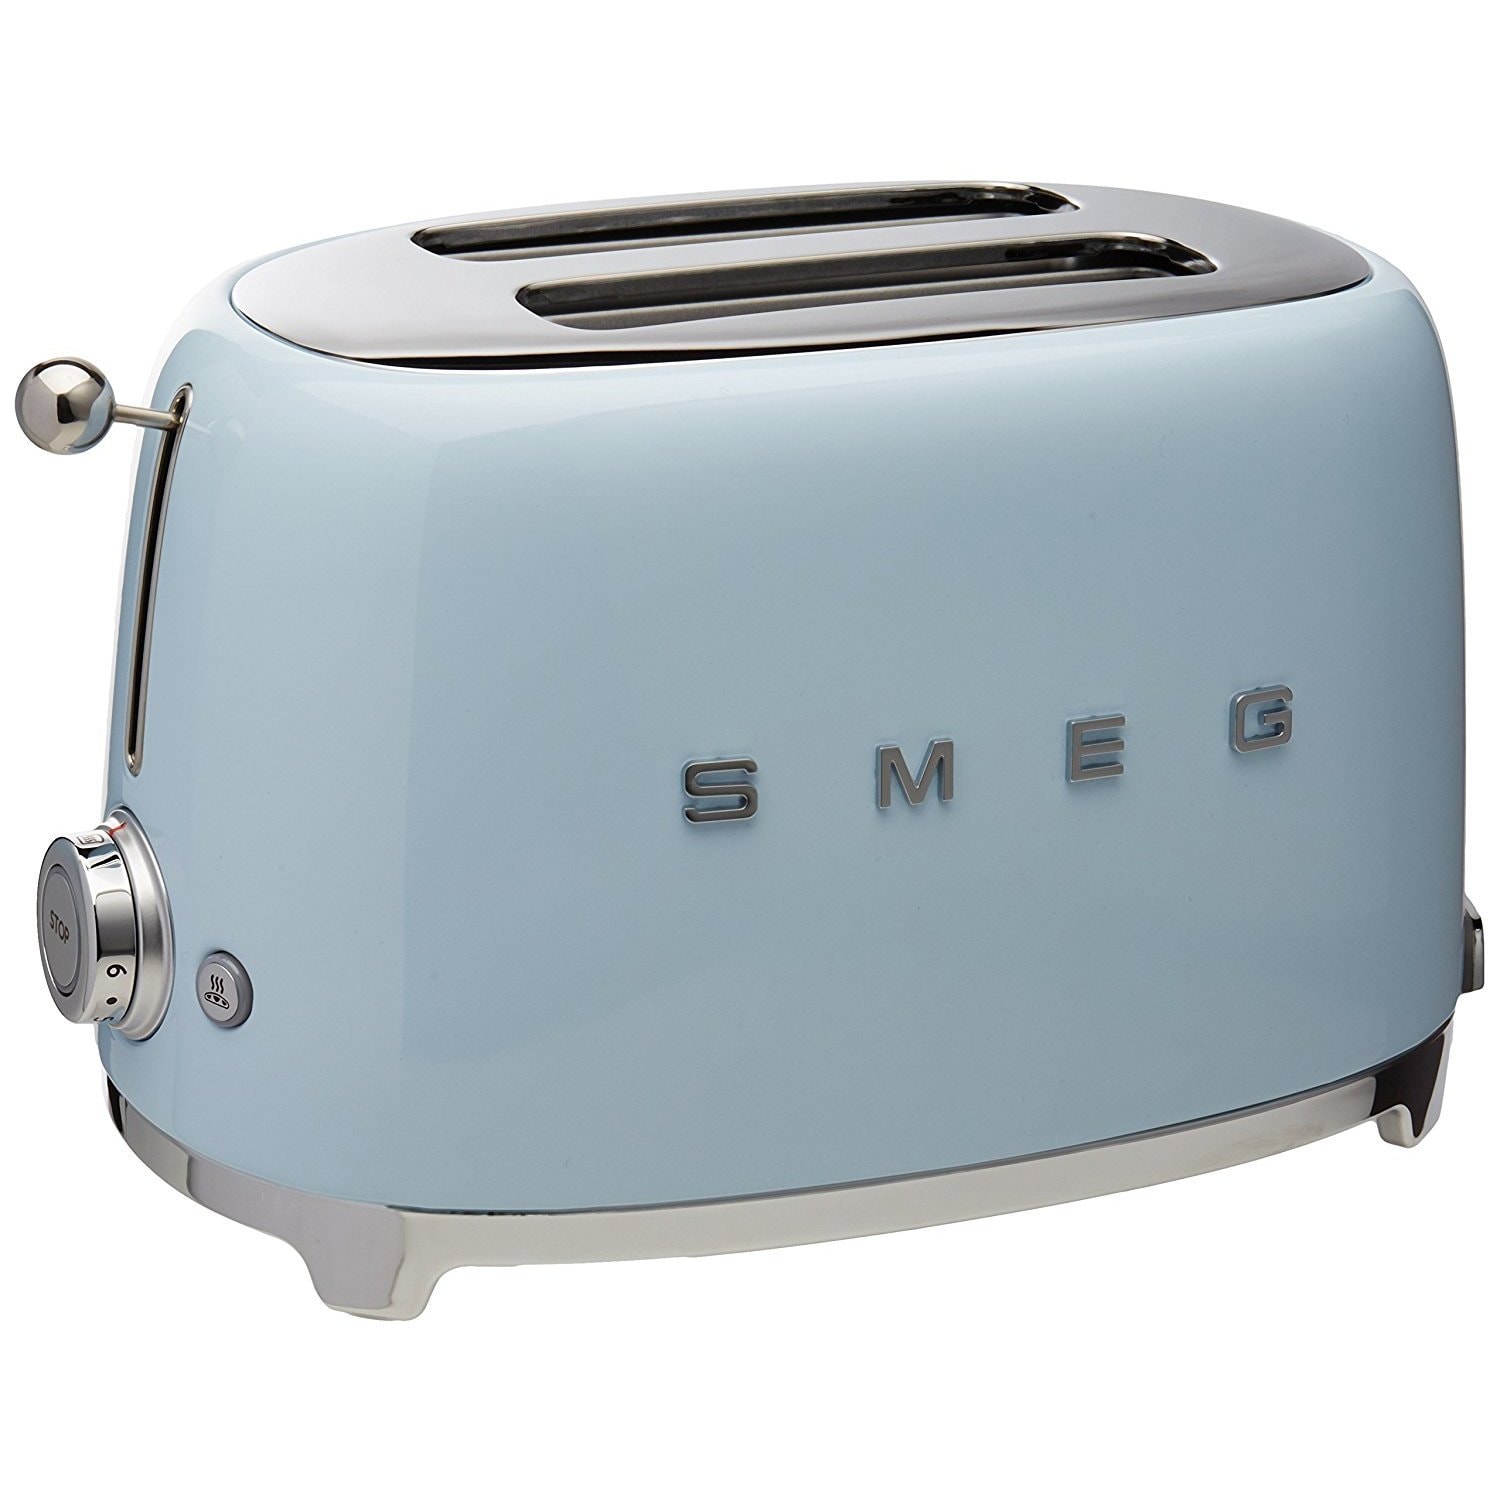 Smeg TSF02 4-Slice 2-Slot Toaster Review